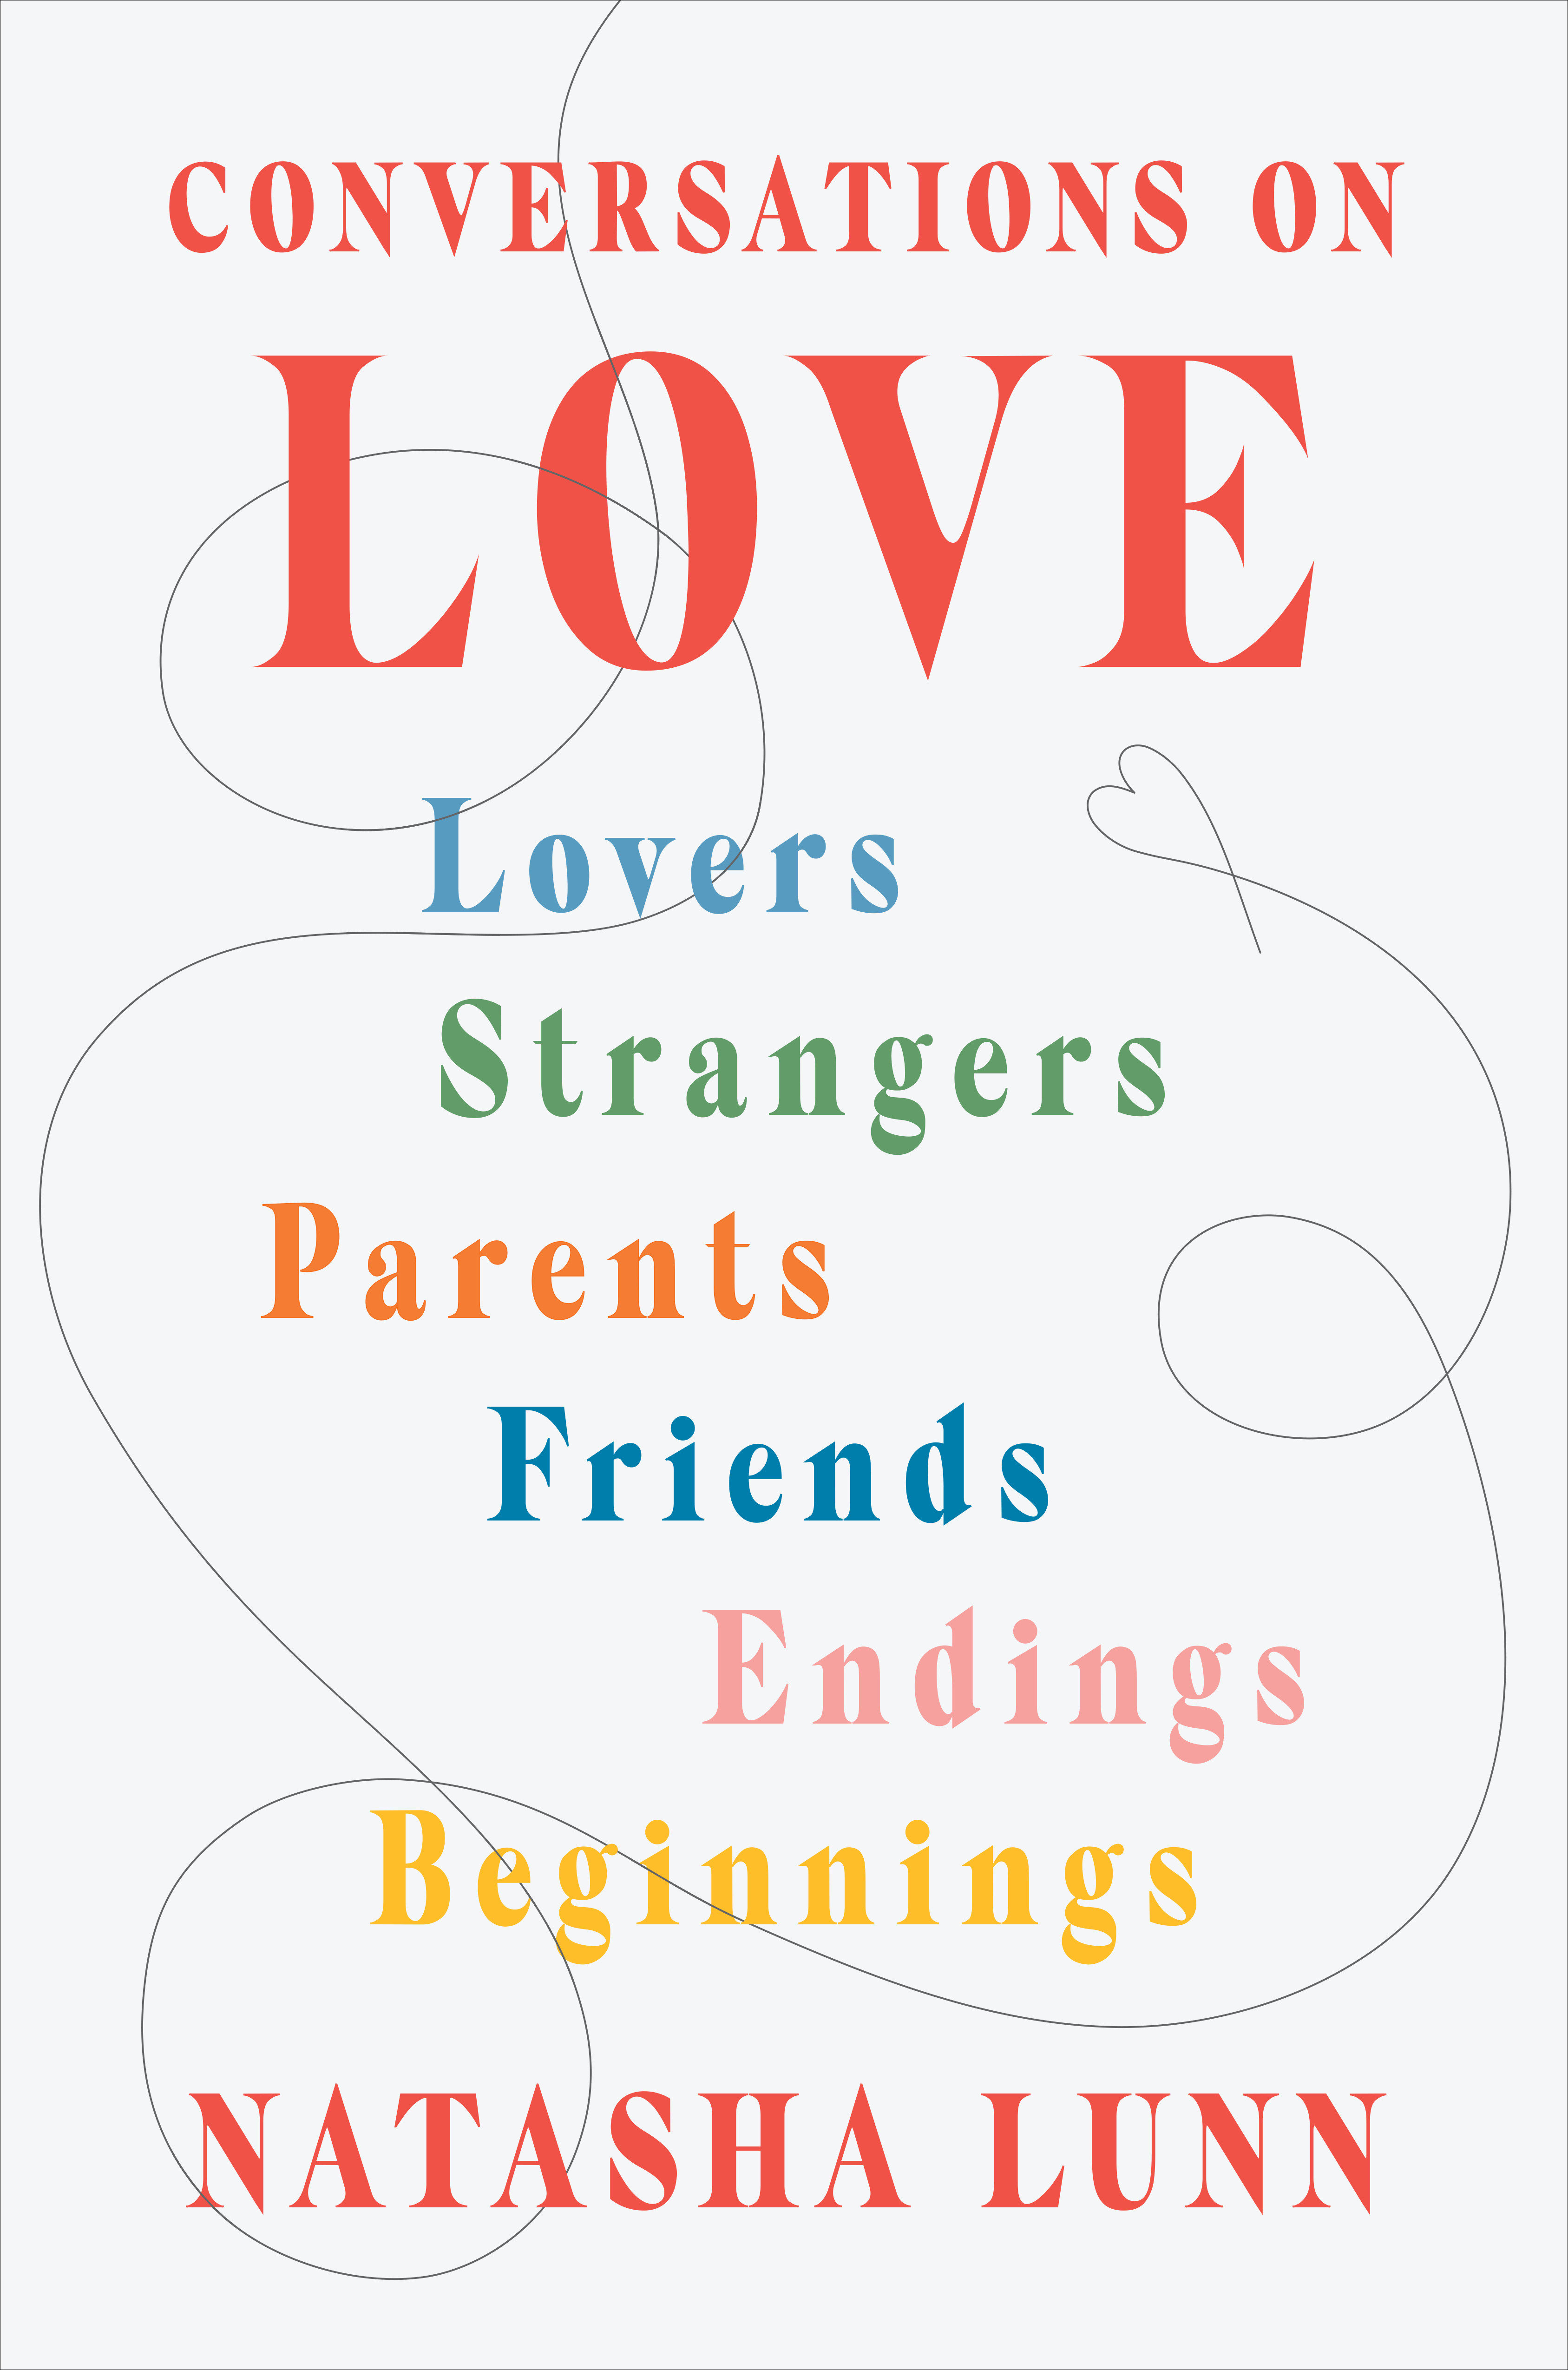 Conversations on Love Lovers, Strangers, Parents, Friends, Endings, Beginnings cover image